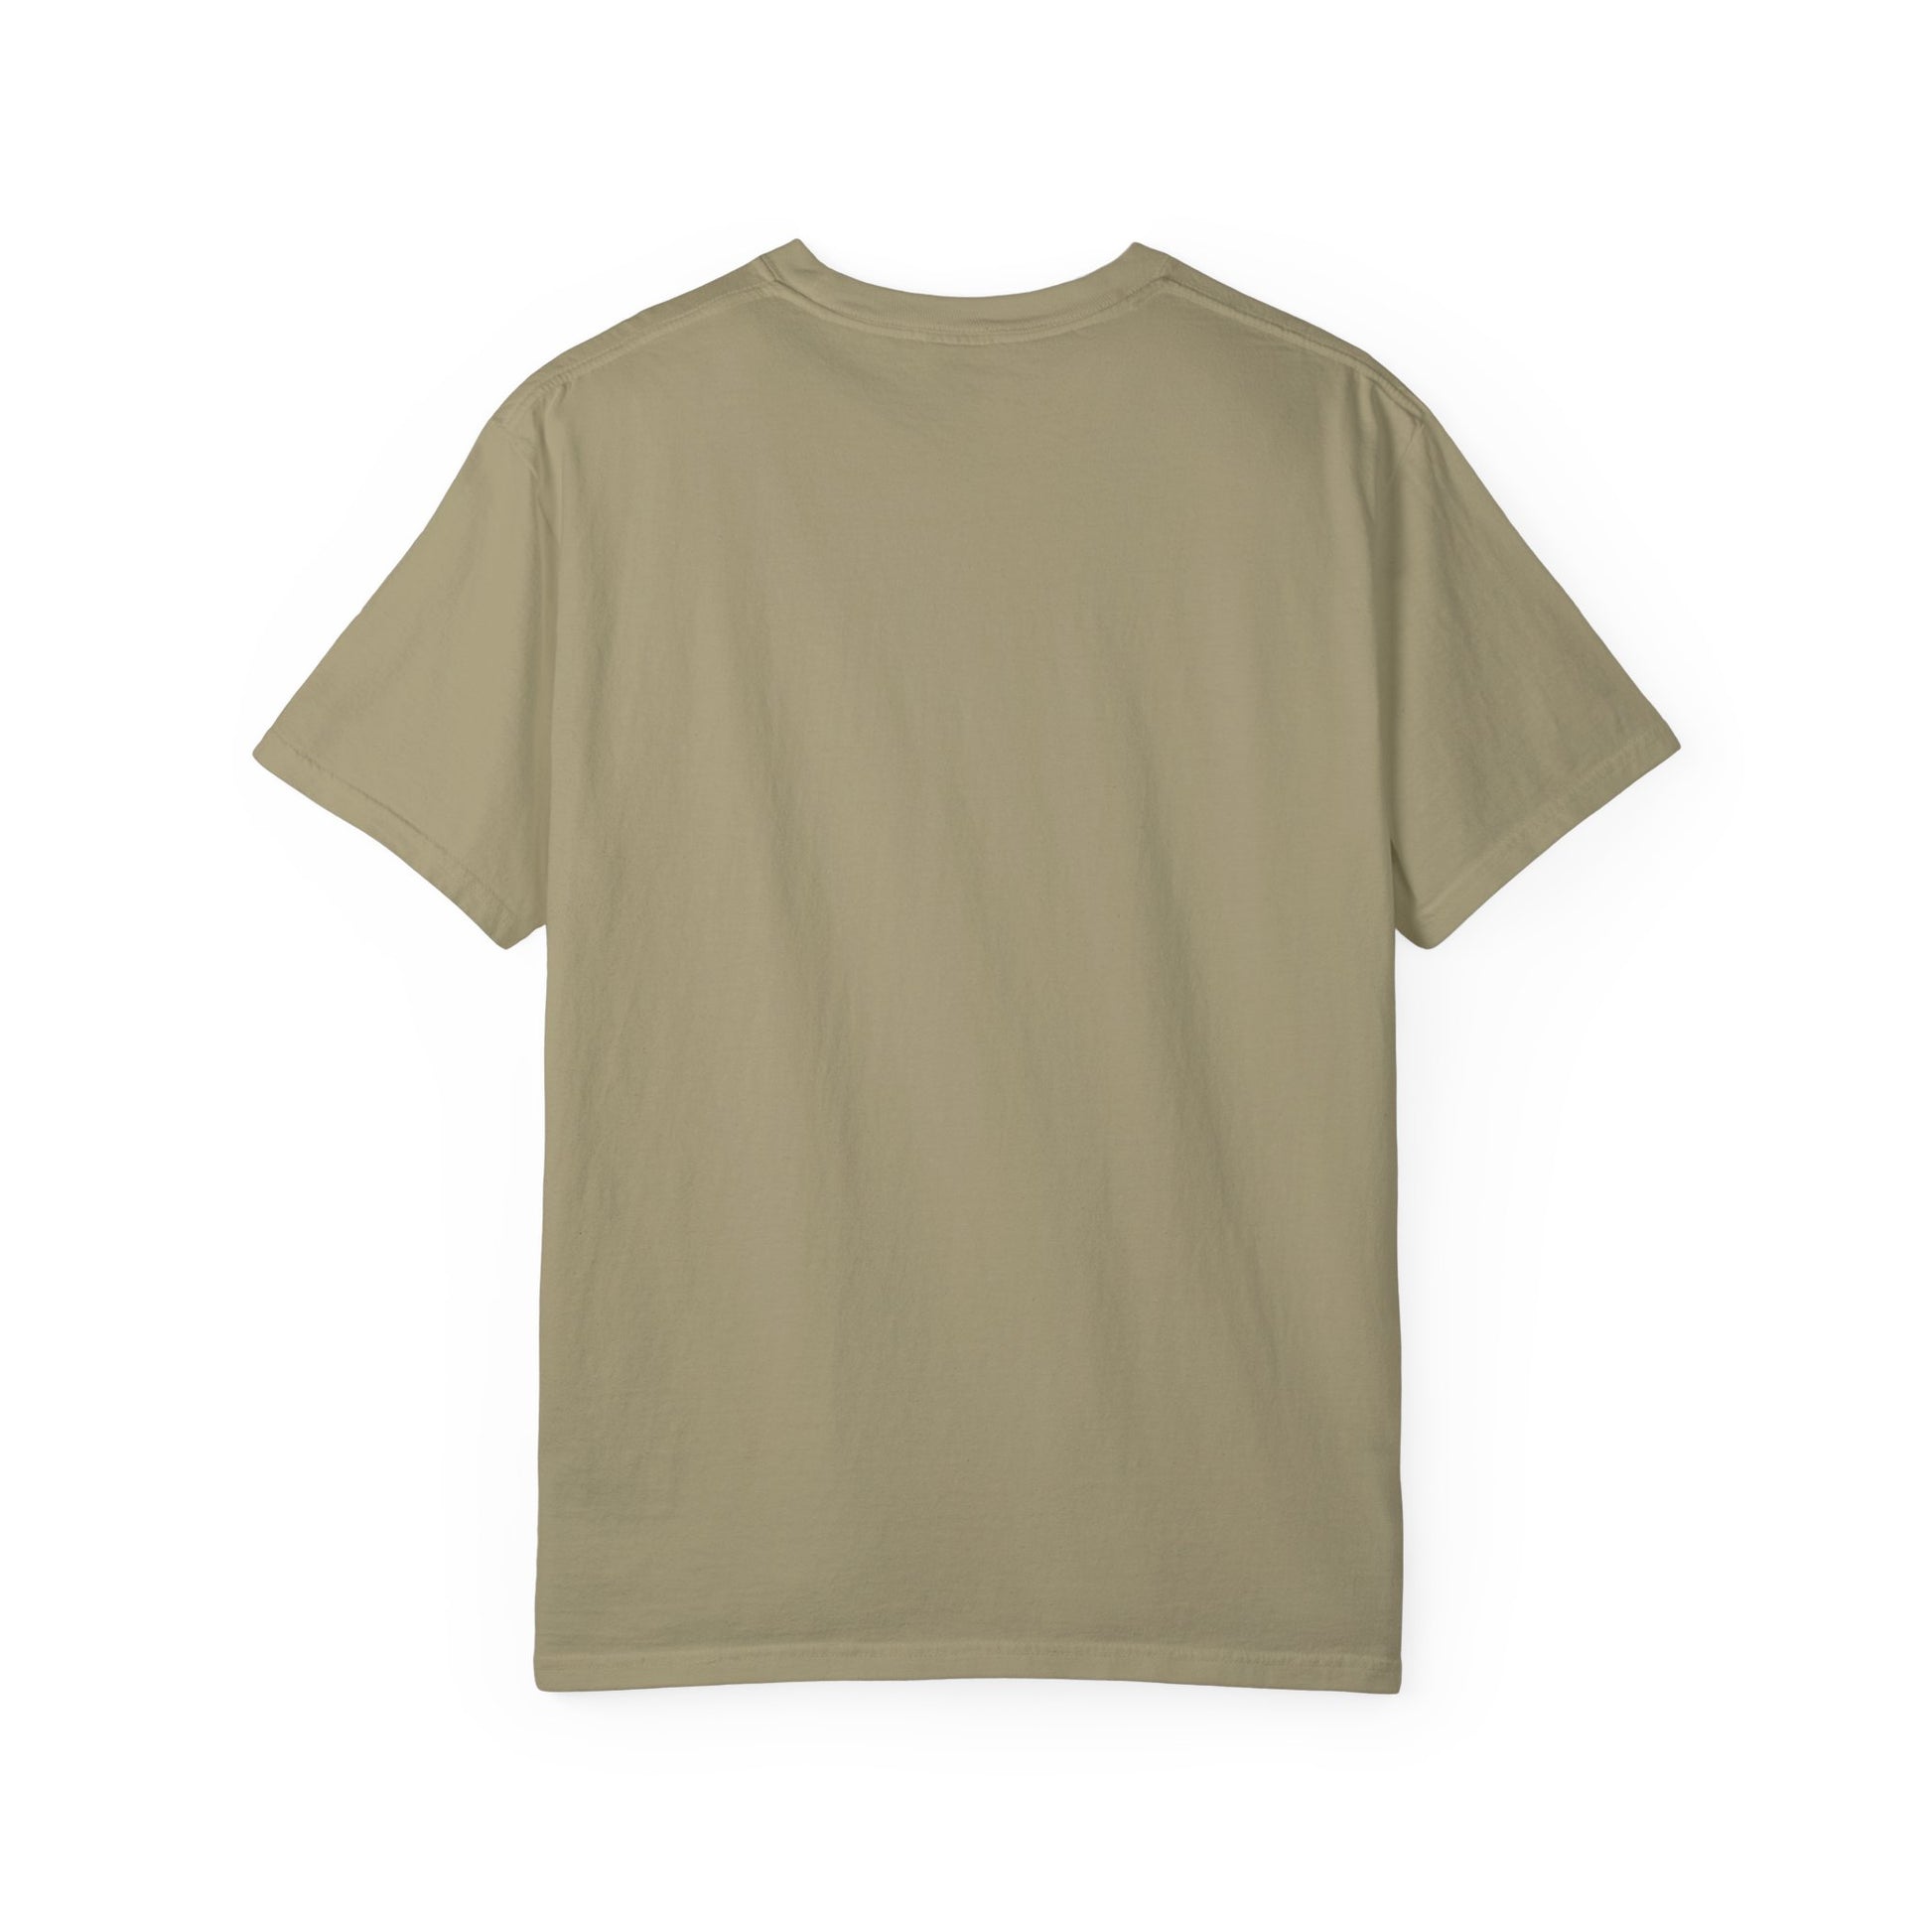 Lion Head Cool Graphic Design Novelty Unisex Garment-dyed T-shirt Cotton Funny Humorous Graphic Soft Premium Unisex Men Women Khaki T-shirt Birthday Gift-46